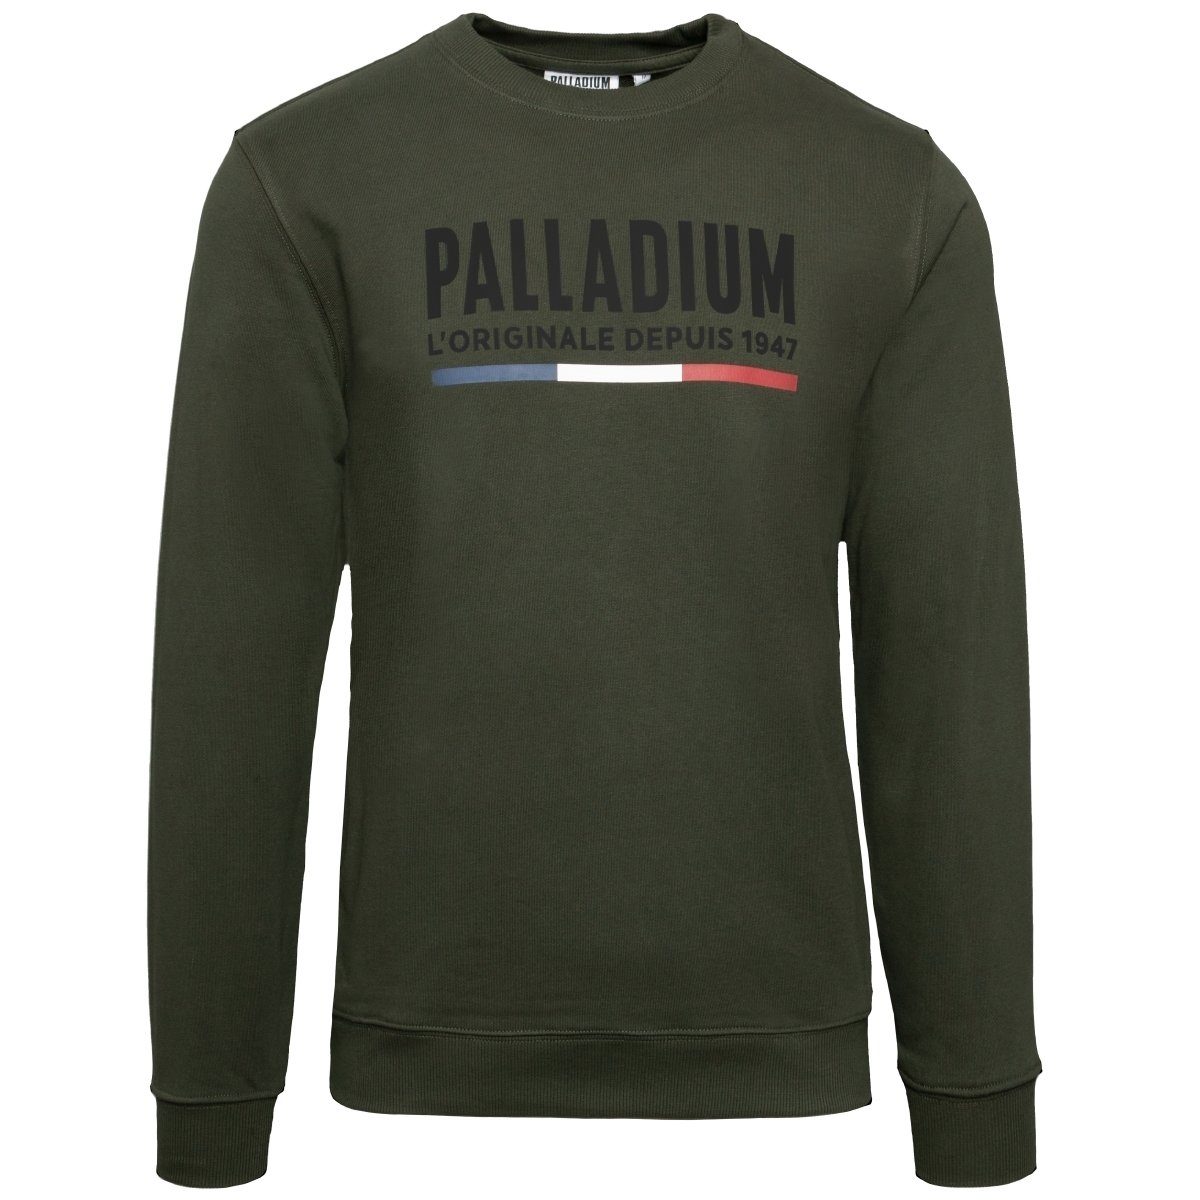 France Palladium gruen Originale Herren Sweatshirt